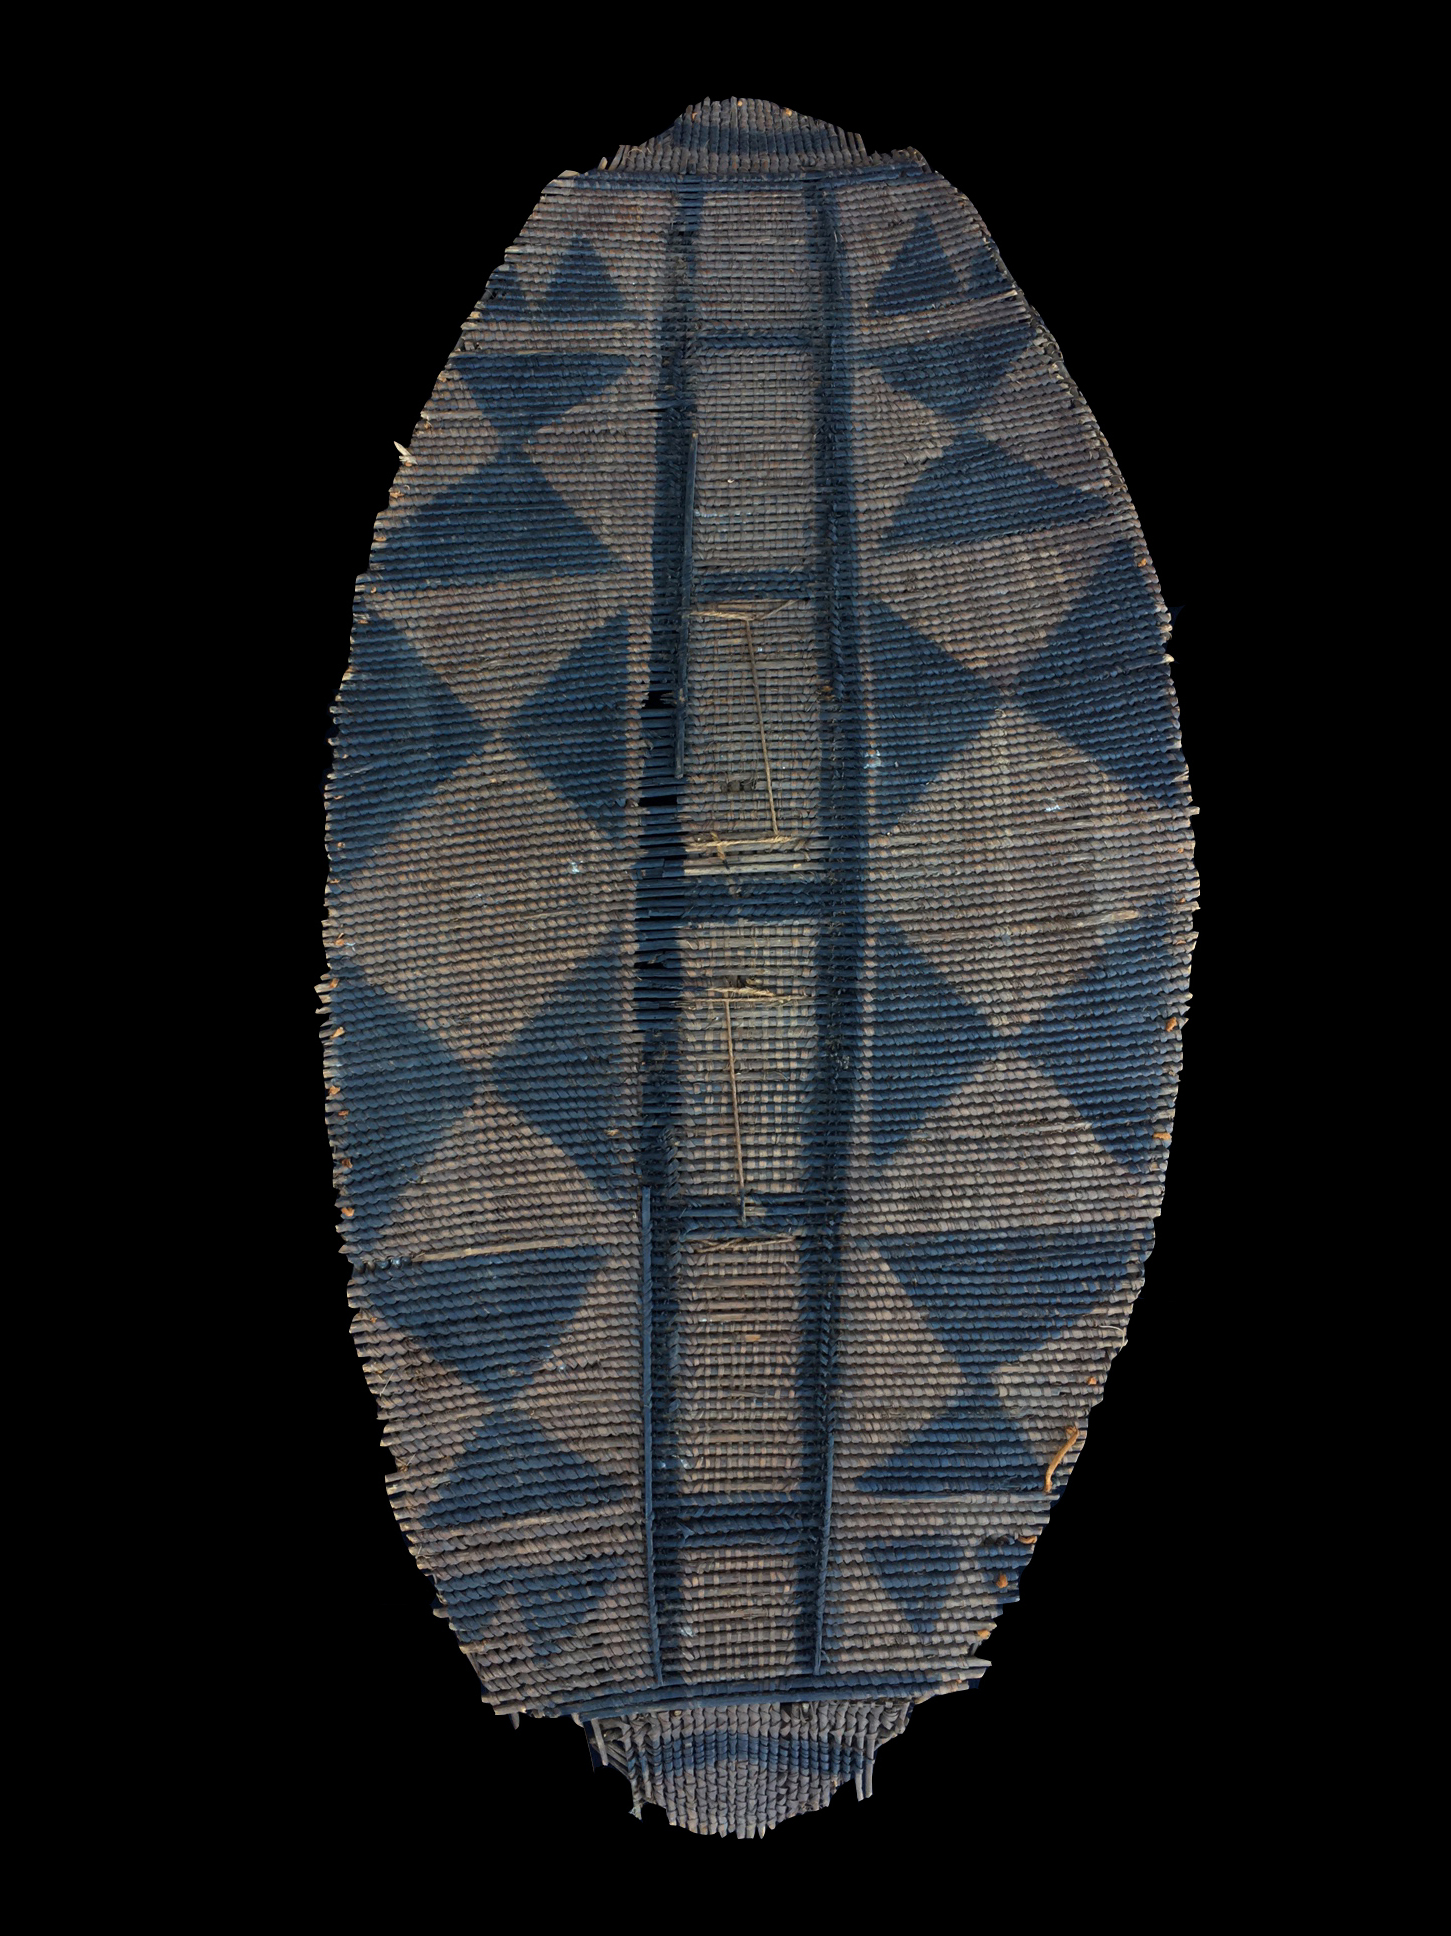 'Gbilija' Shield - Azande People, D.R. Congo